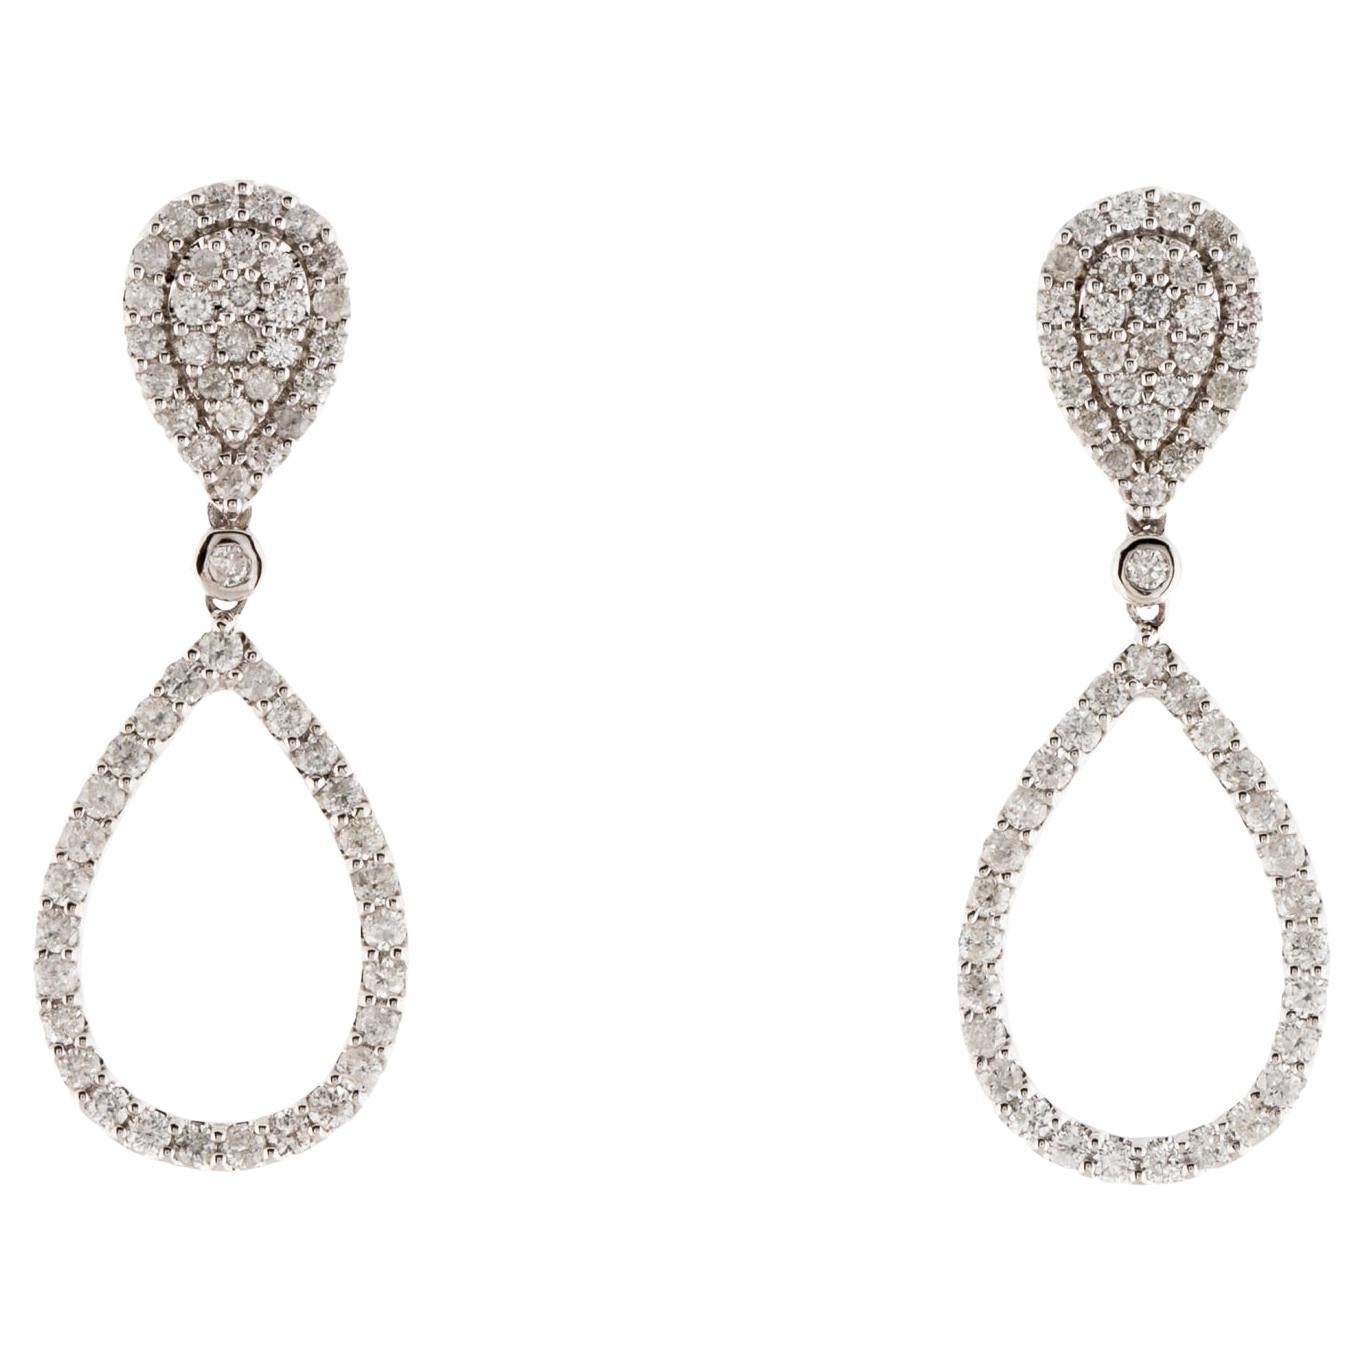 Exquisite 14K Diamond Drop Earrings - 1.40ctw Radiant Beauty & Luxury